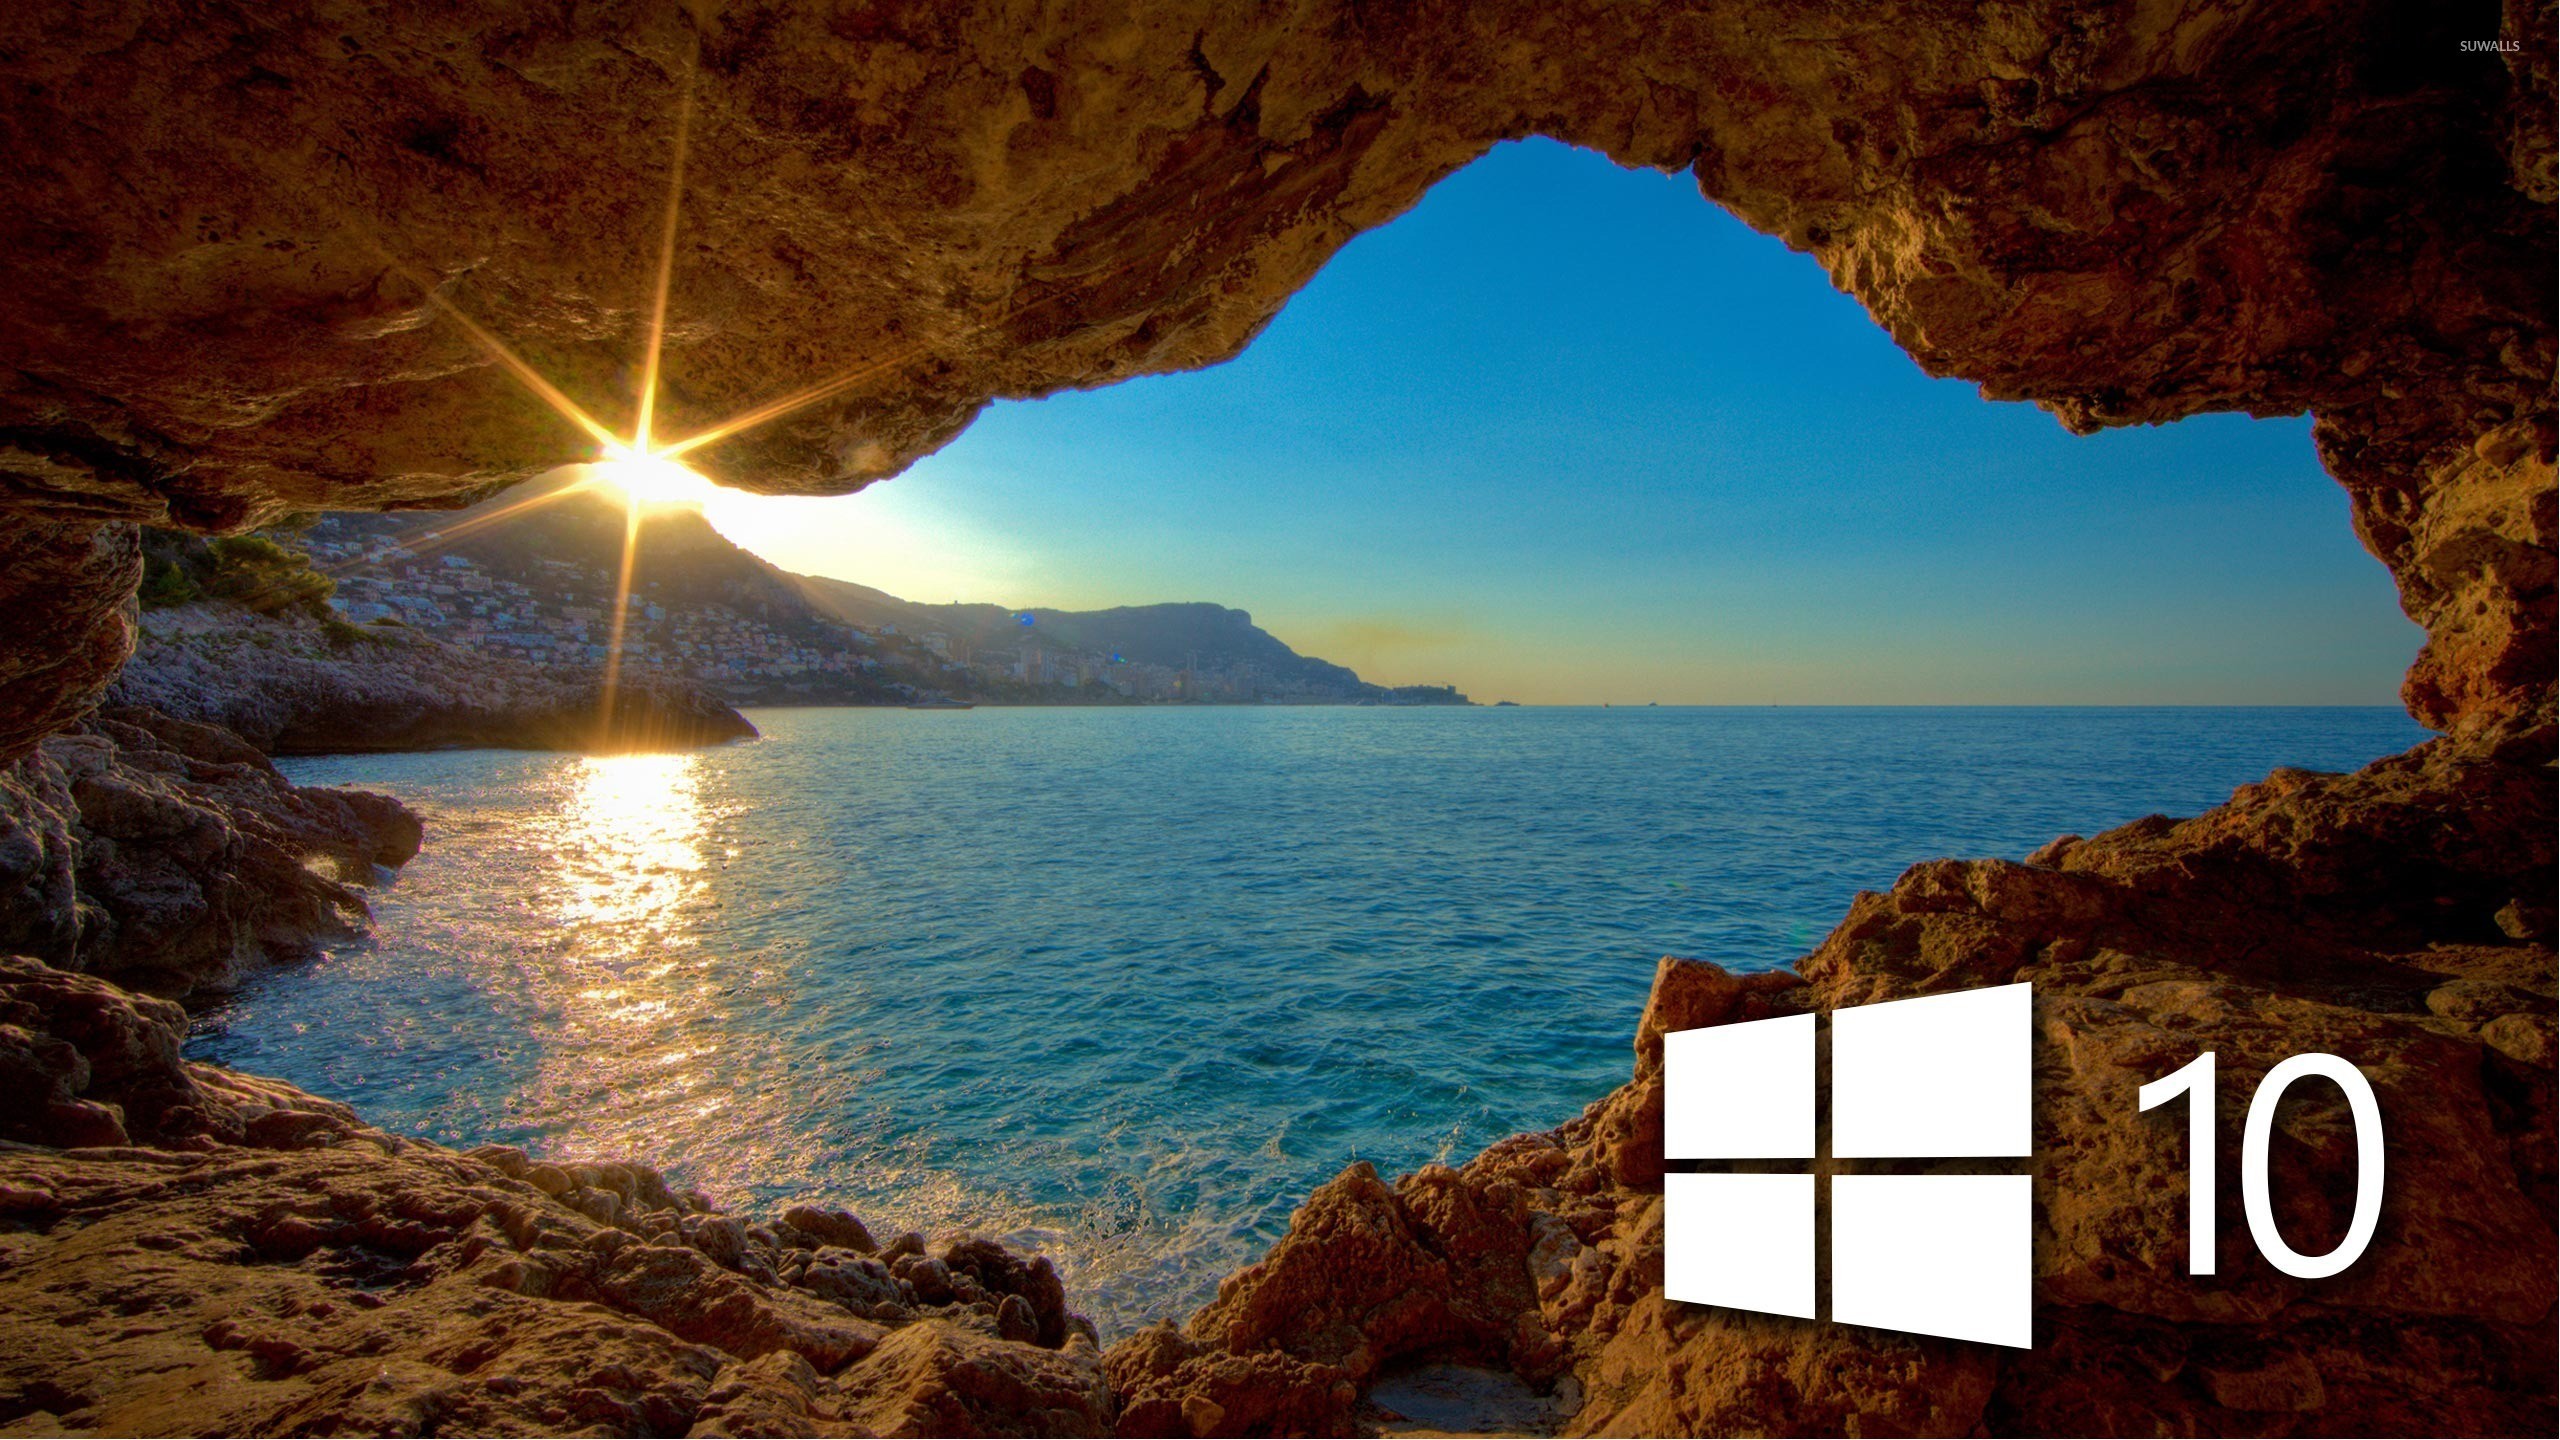 Download Screensaver For Windows 10 - Screensavers And Wallpaper ...